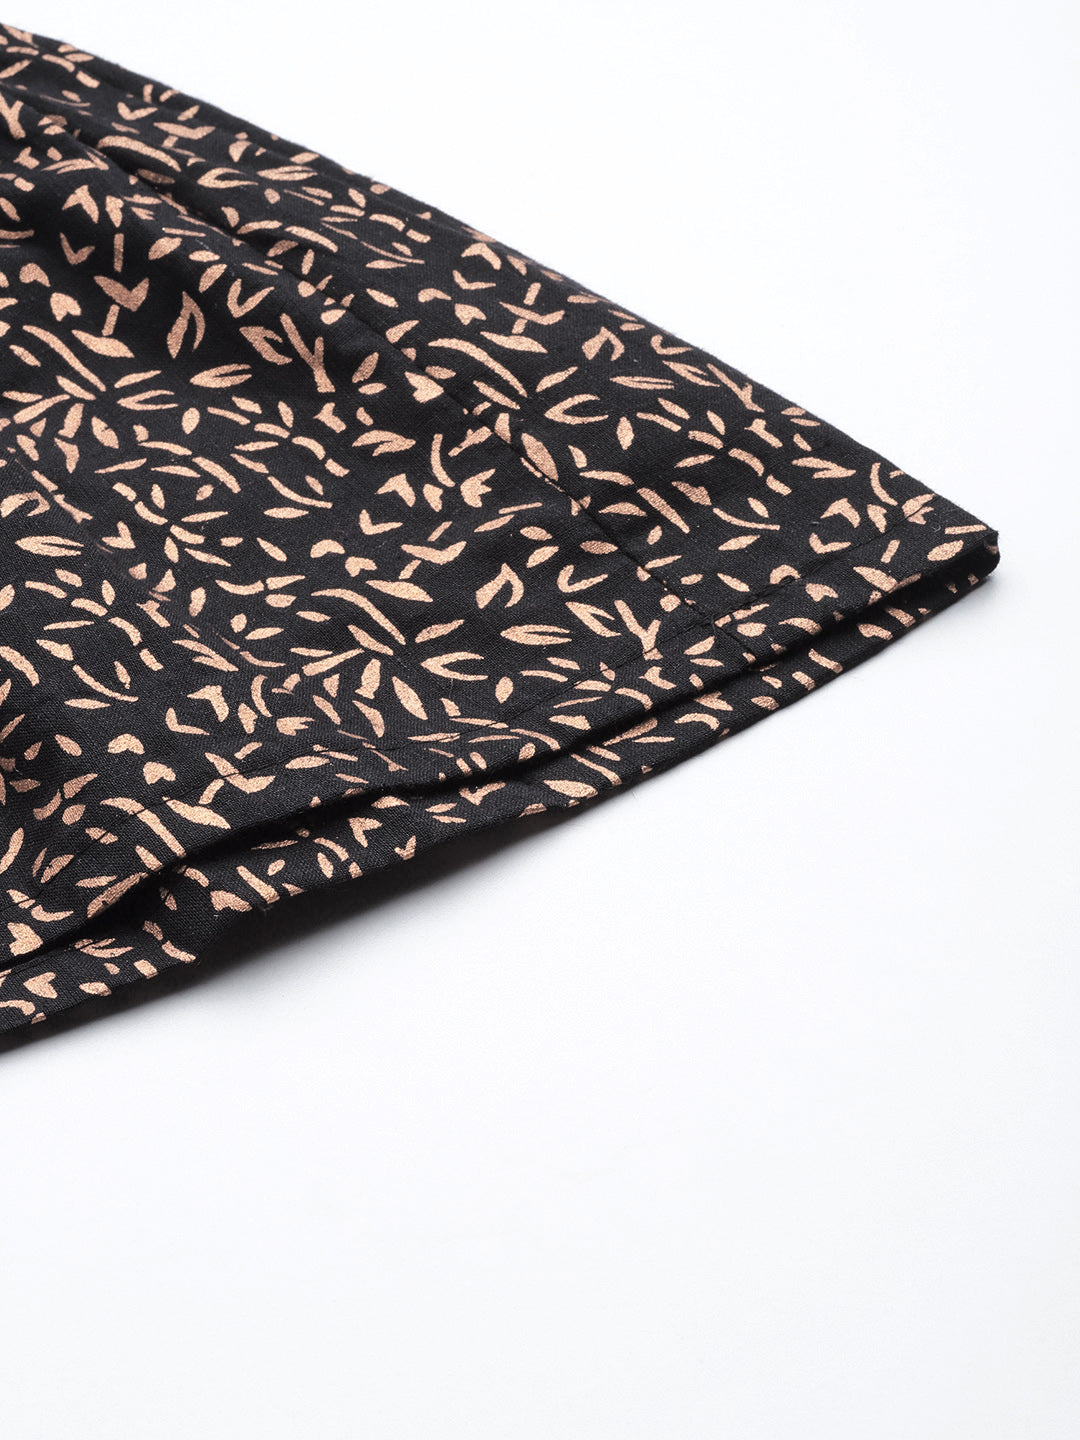 Black Printed Pure Cotton Jumpsuit with Lace Details